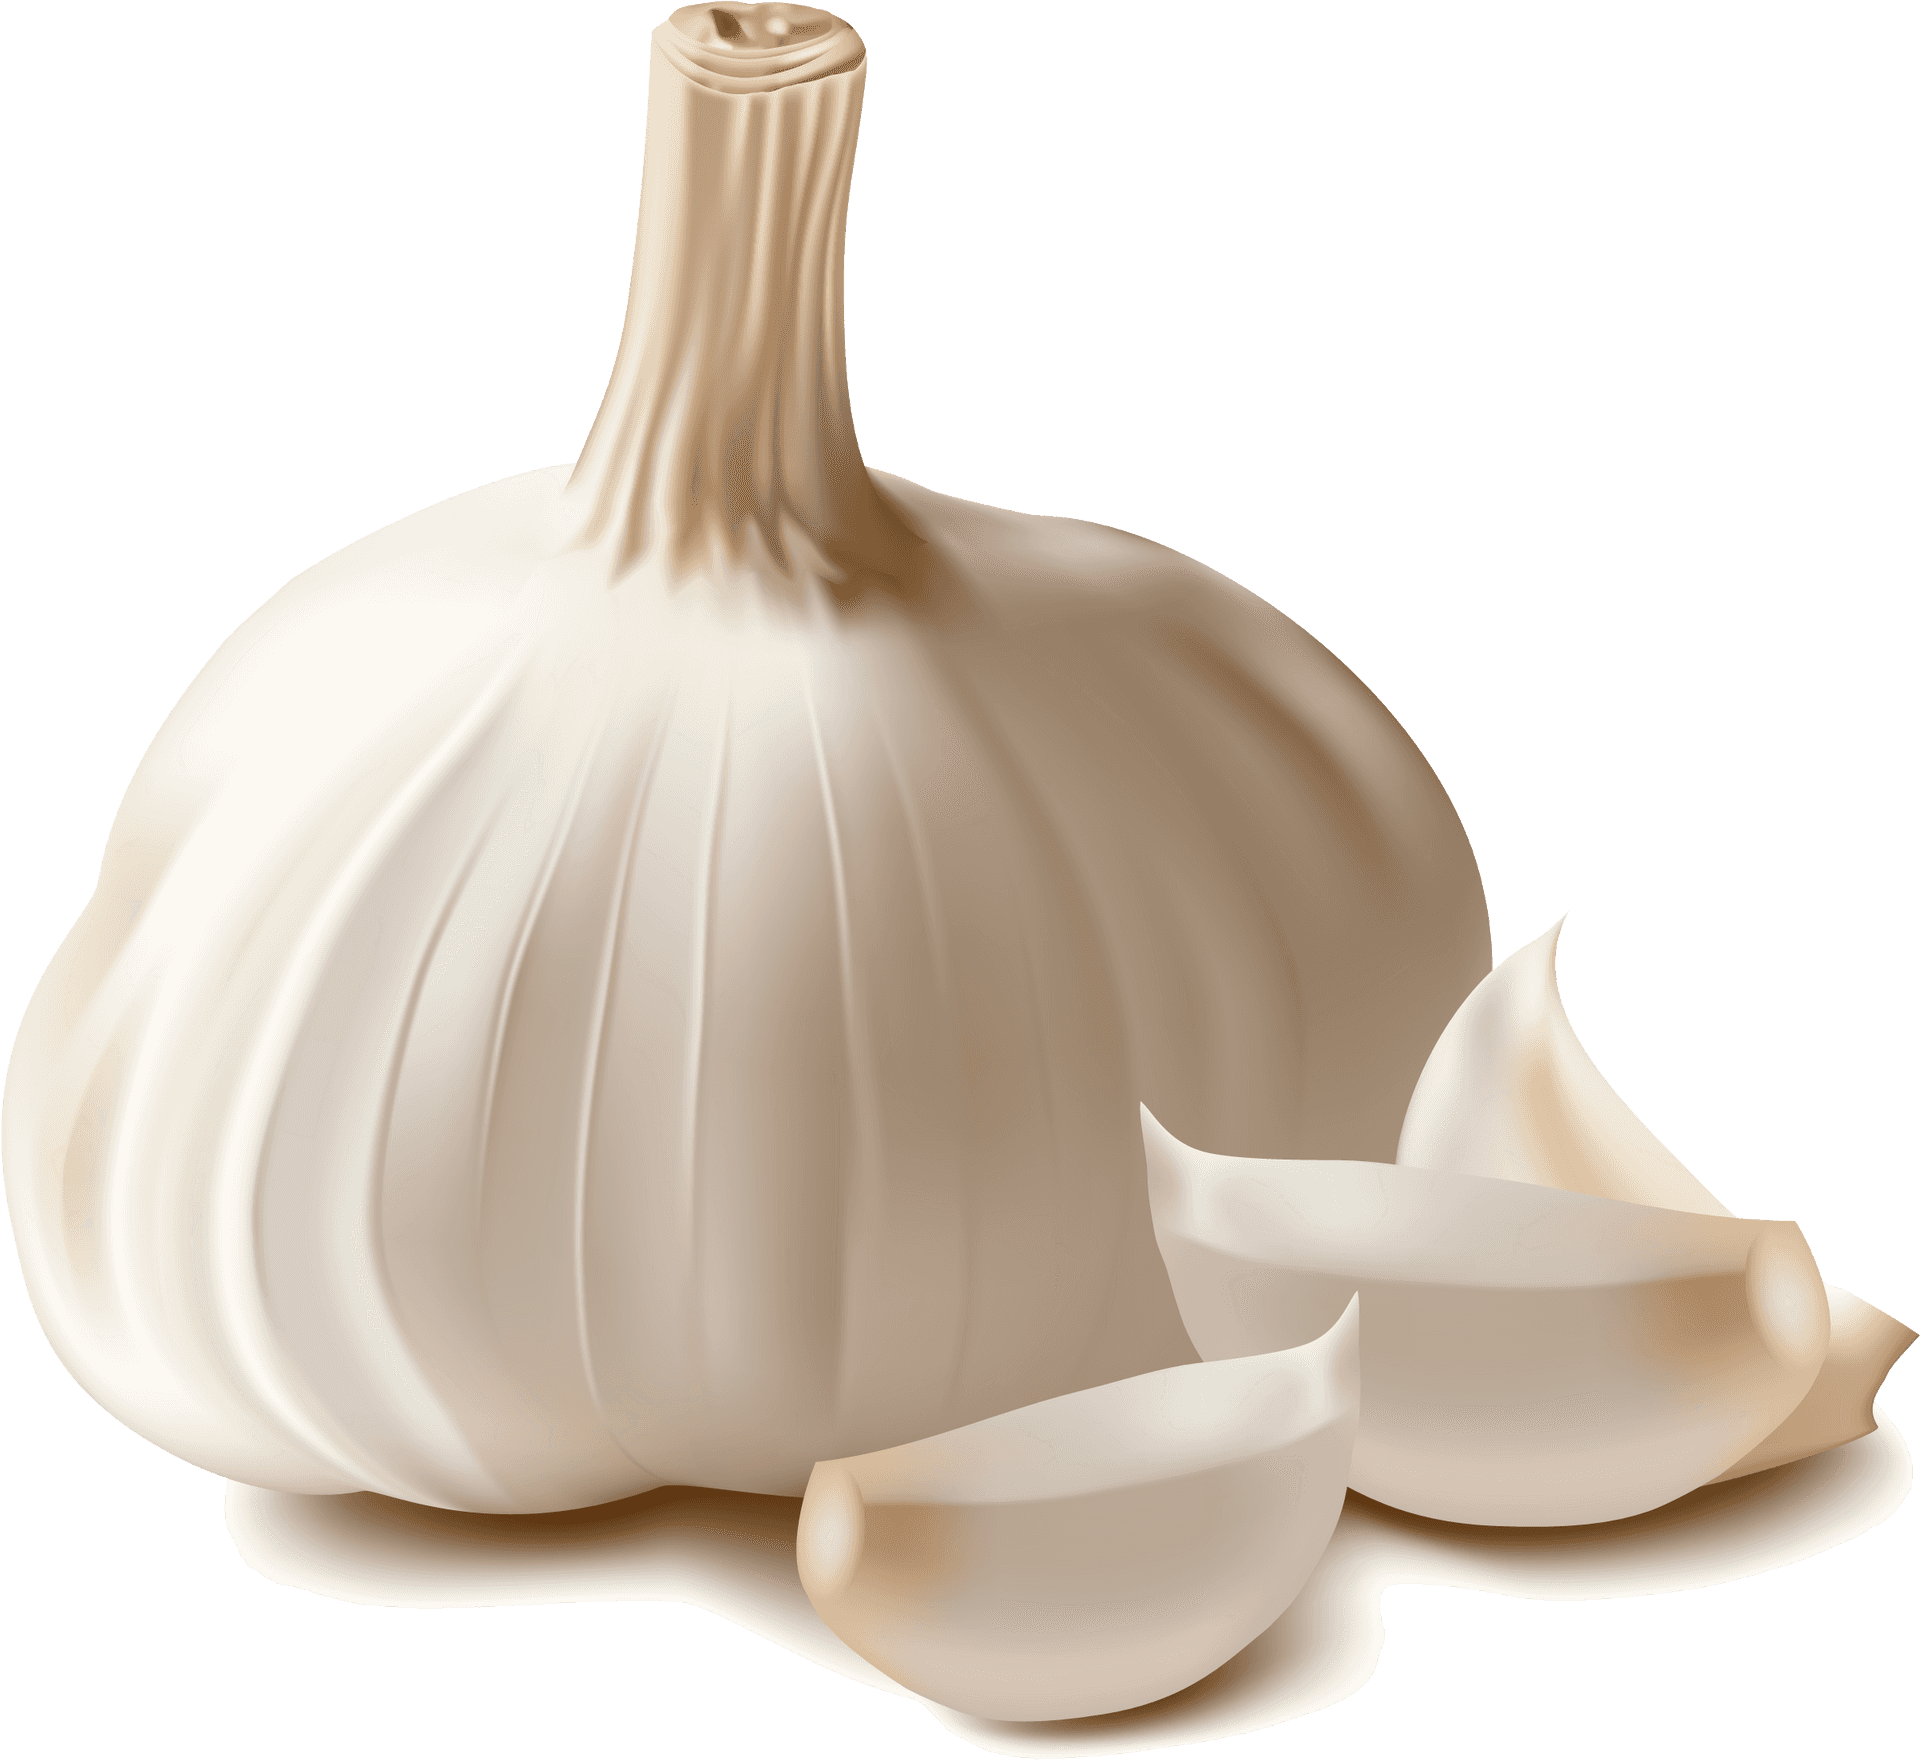 Fresh Garlic Bulband Cloves PNG image